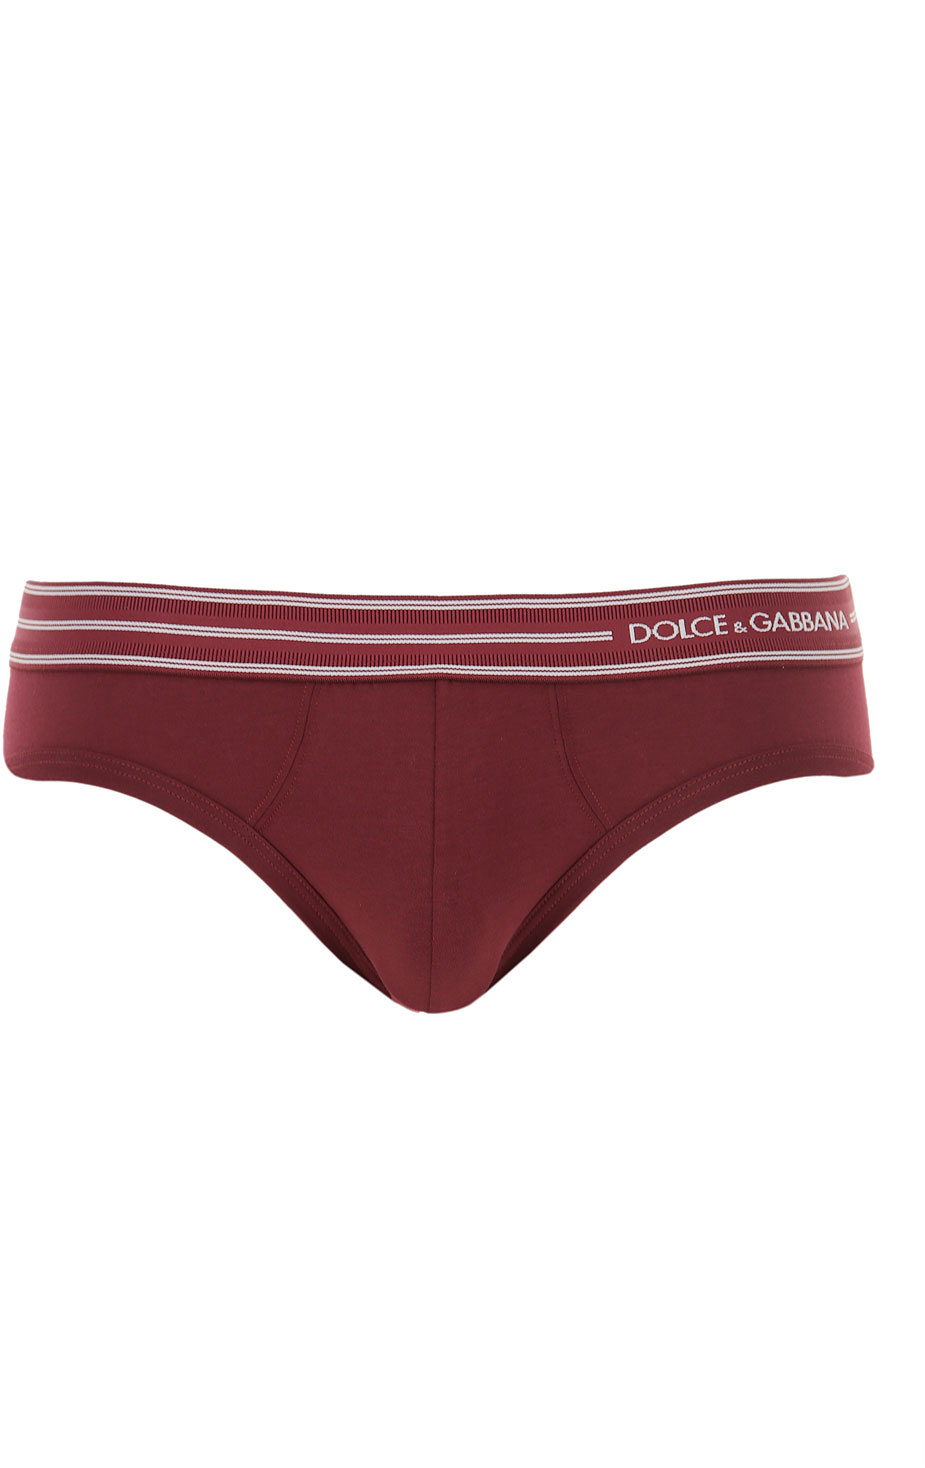 Mens Underwear Dolce & Gabbana, Style code: m3b52j-fugia-f0130